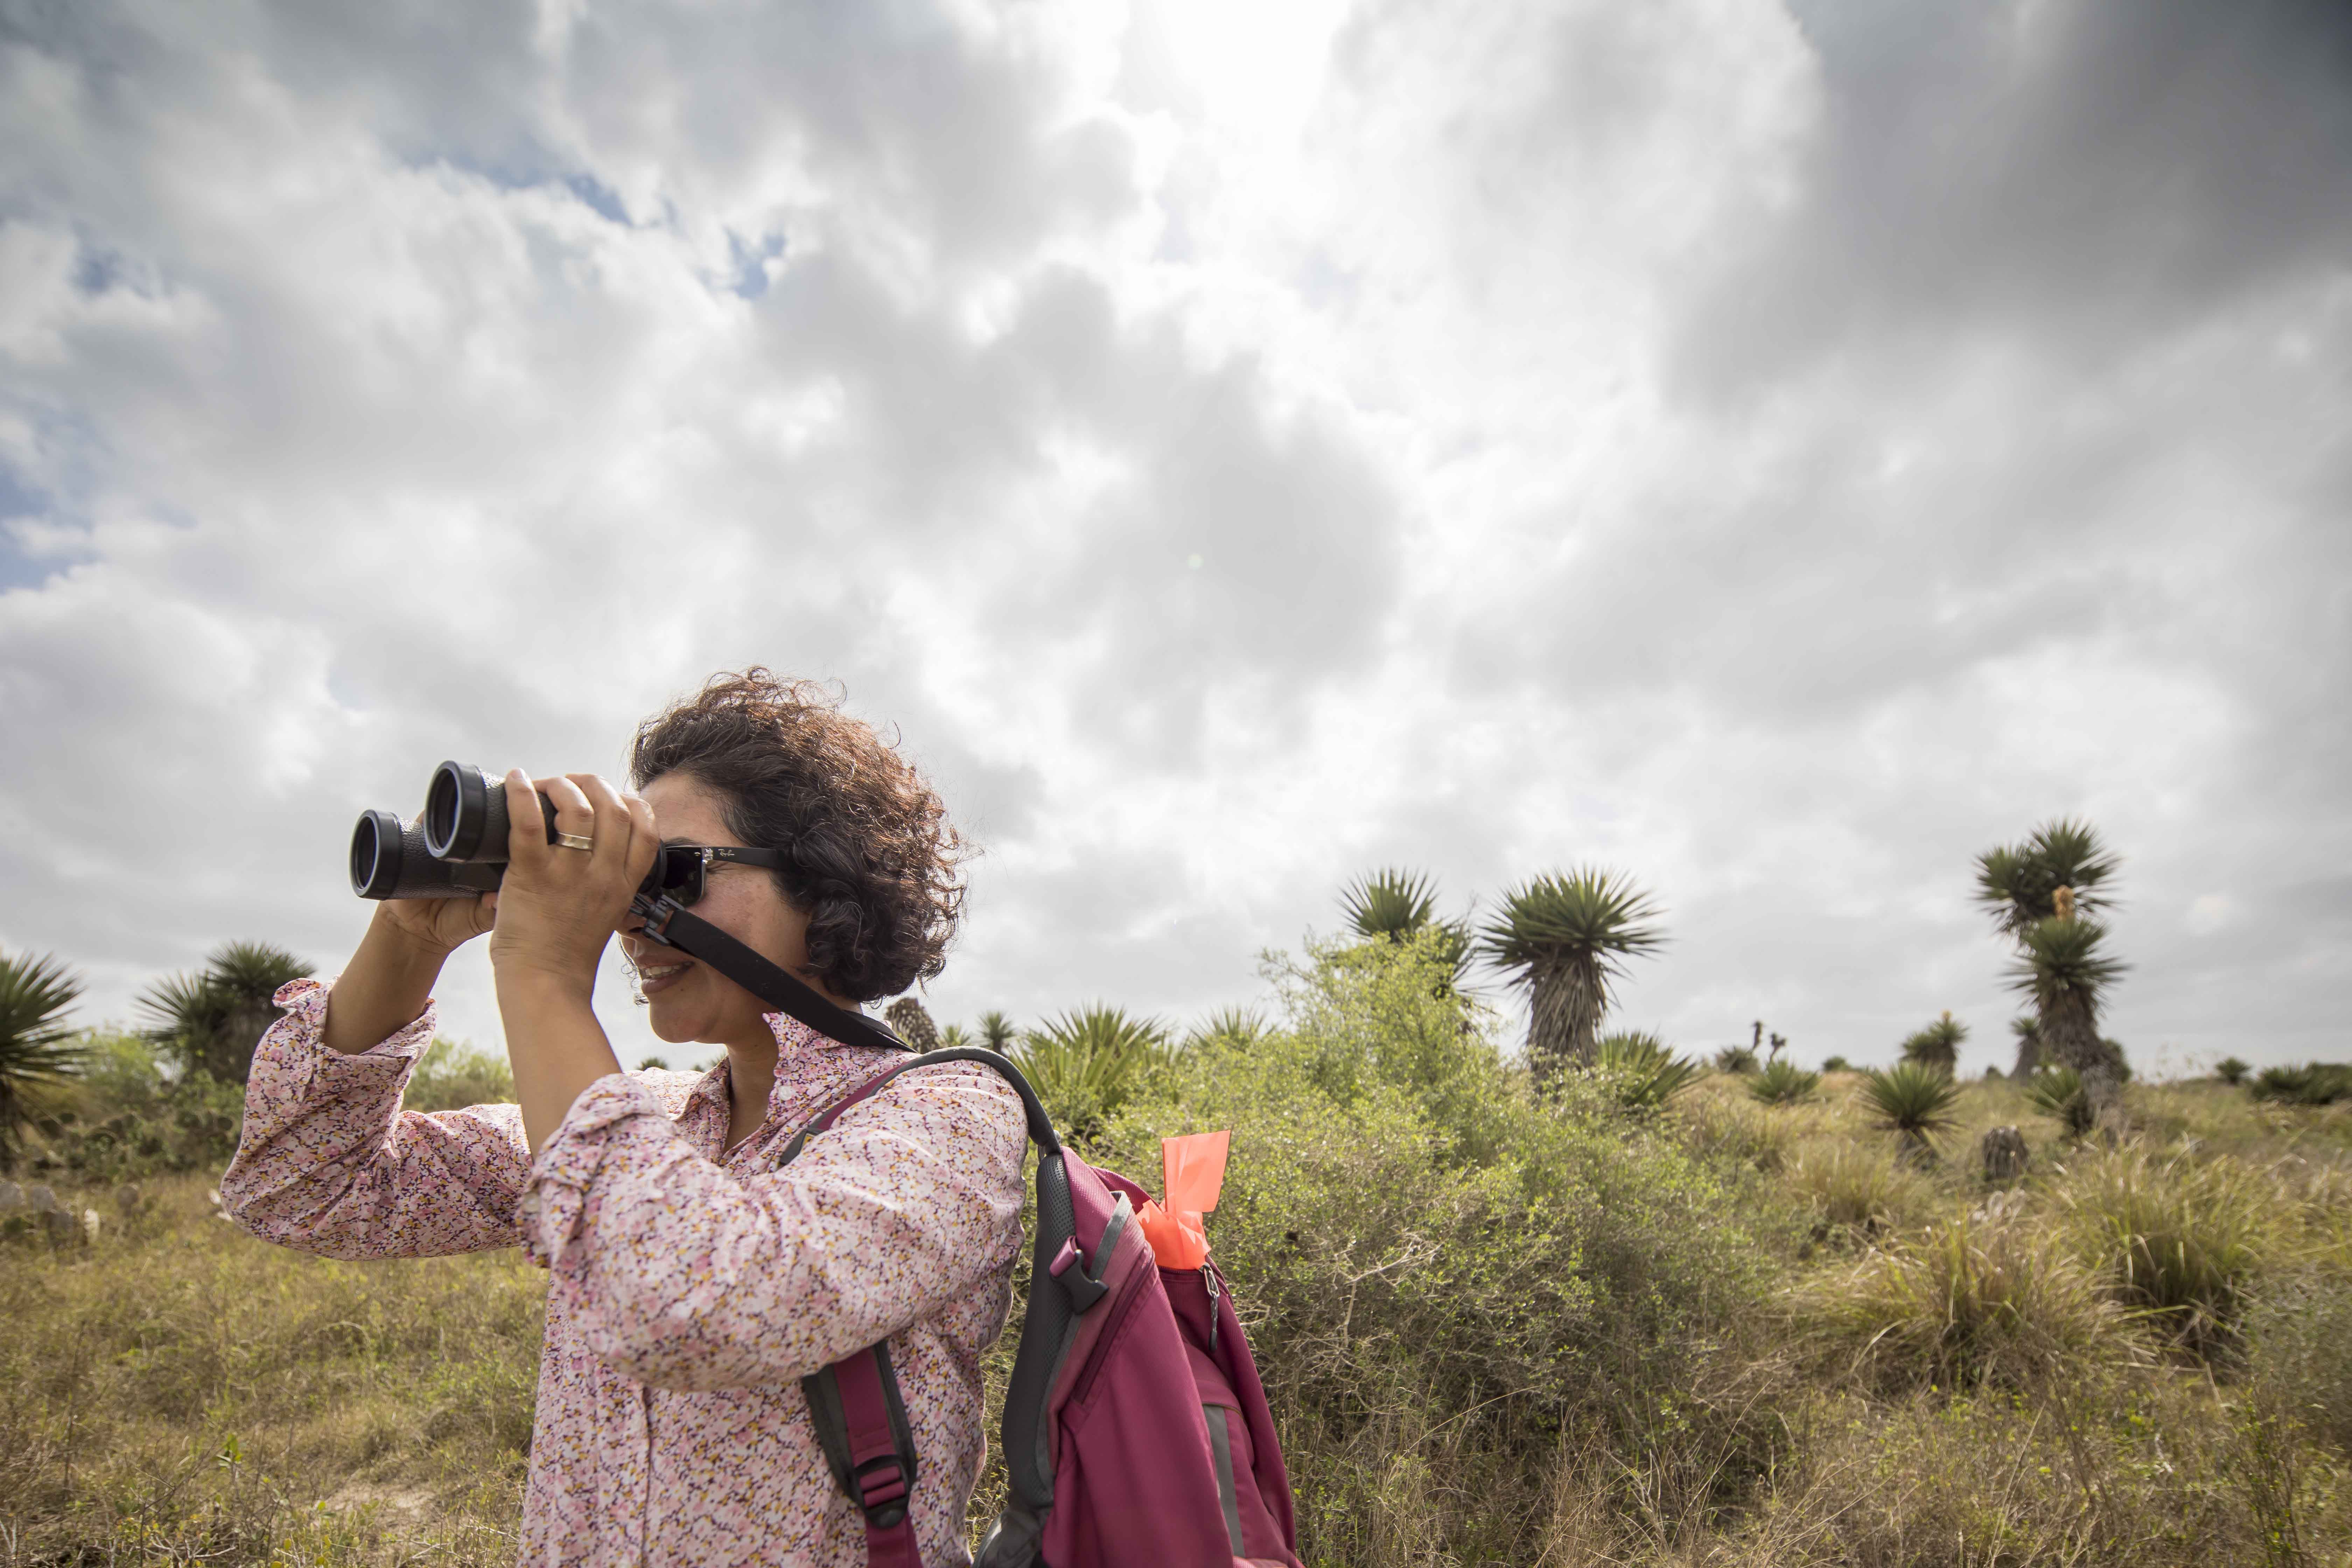 A woman looks through binoculars in shrubland.